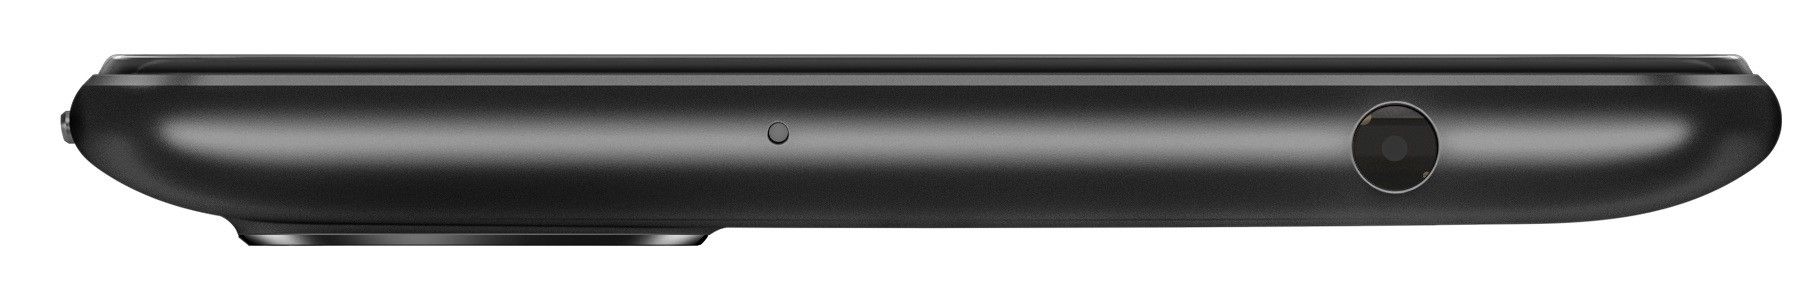 Смартфон Xiaomi Redmi 6A 16Gb Black: Фото 4